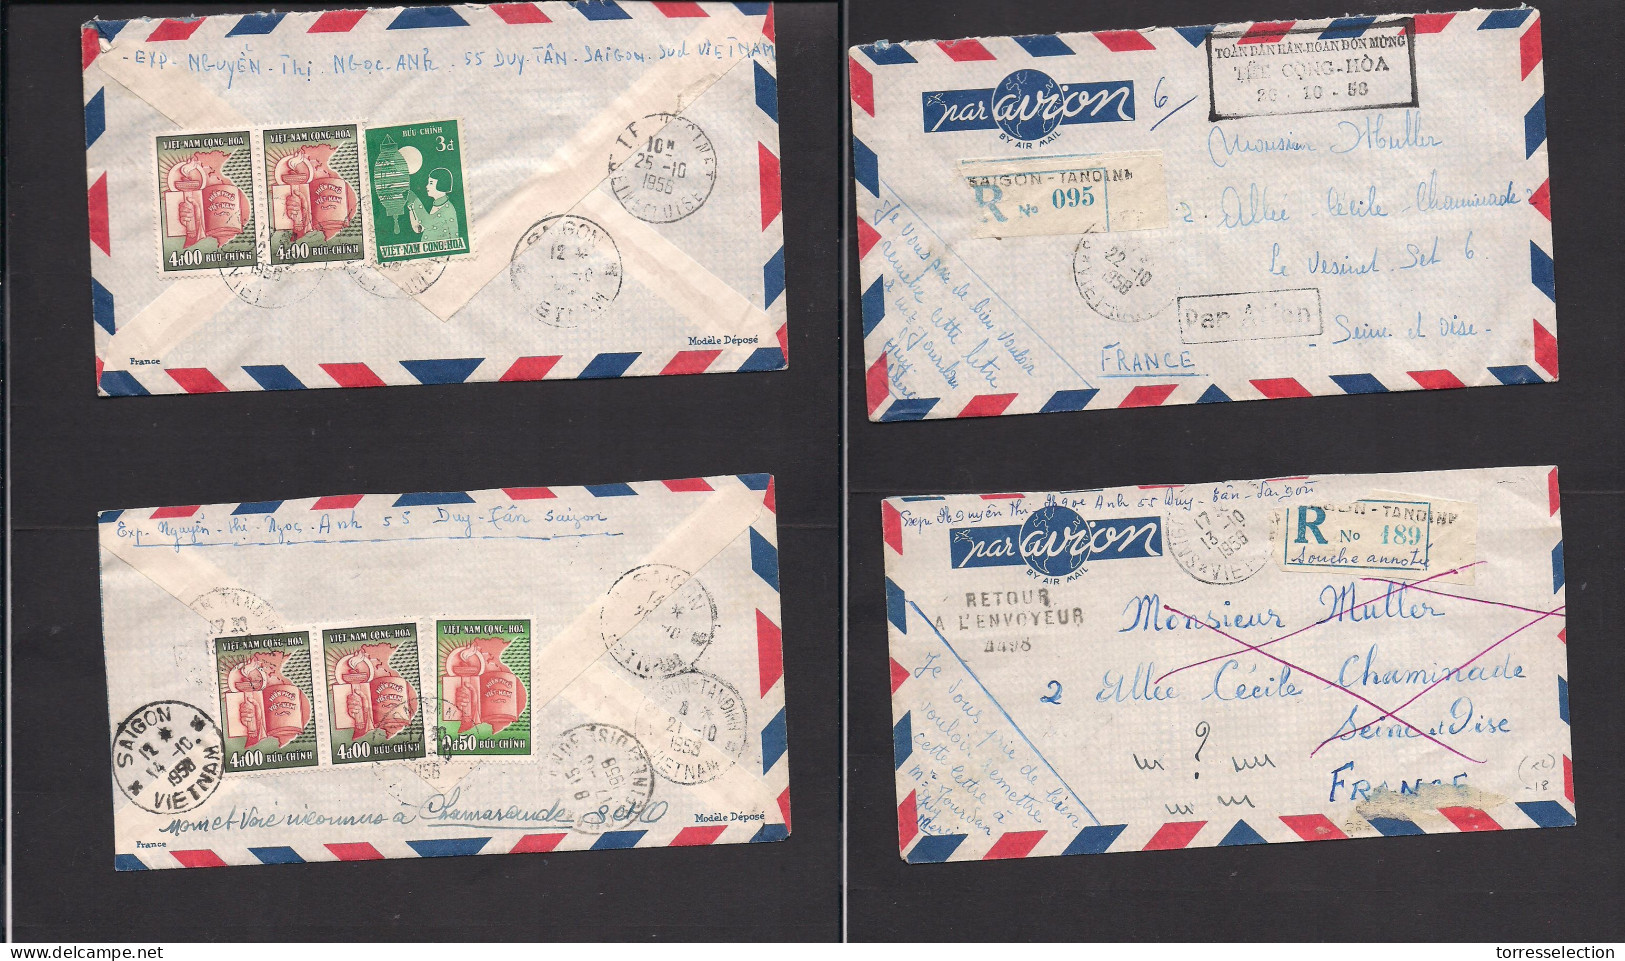 INDOCHINA. 1956. Vietnam. Saignon - France. 2 Airmails Reverse Multifkd Envelope. Fine Pair. XSALE. - Sonstige - Asien